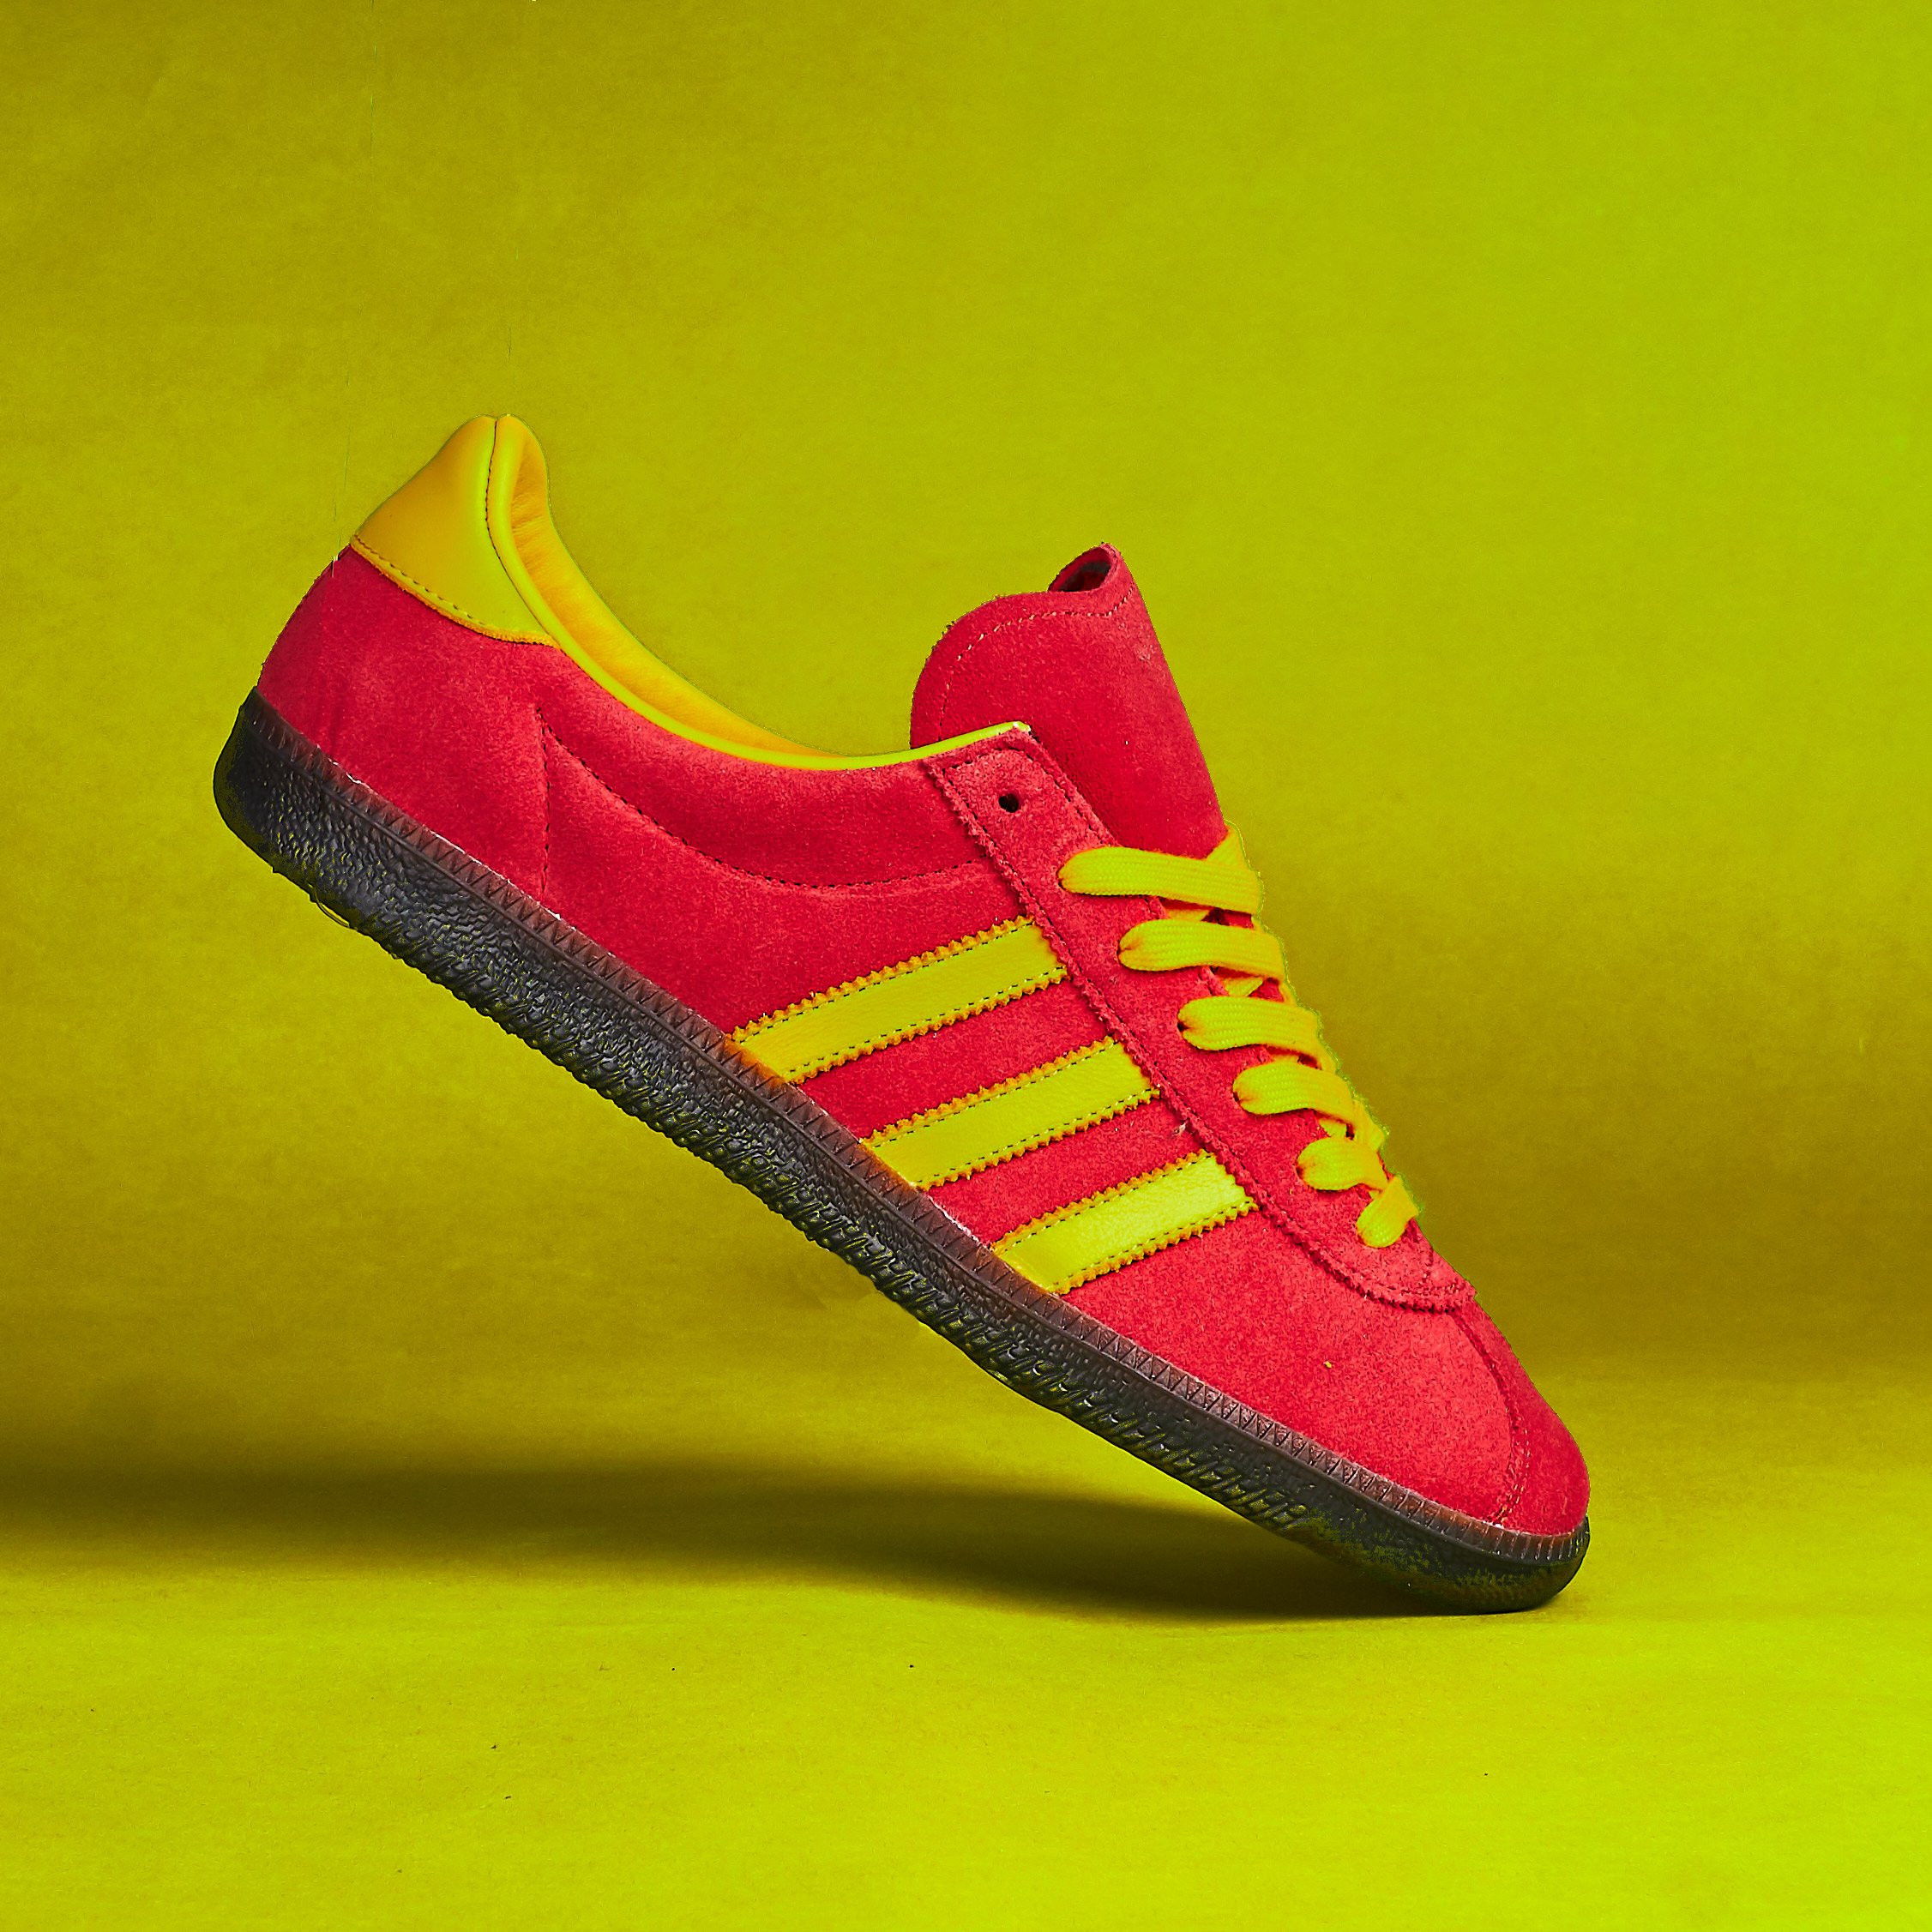 properlbc on "Adidas Spiritus SPZL now available in Store and Online ( https://t.co/8GdHTAnqle ) in Proper https://t.co/vbokTbE1mL" / Twitter